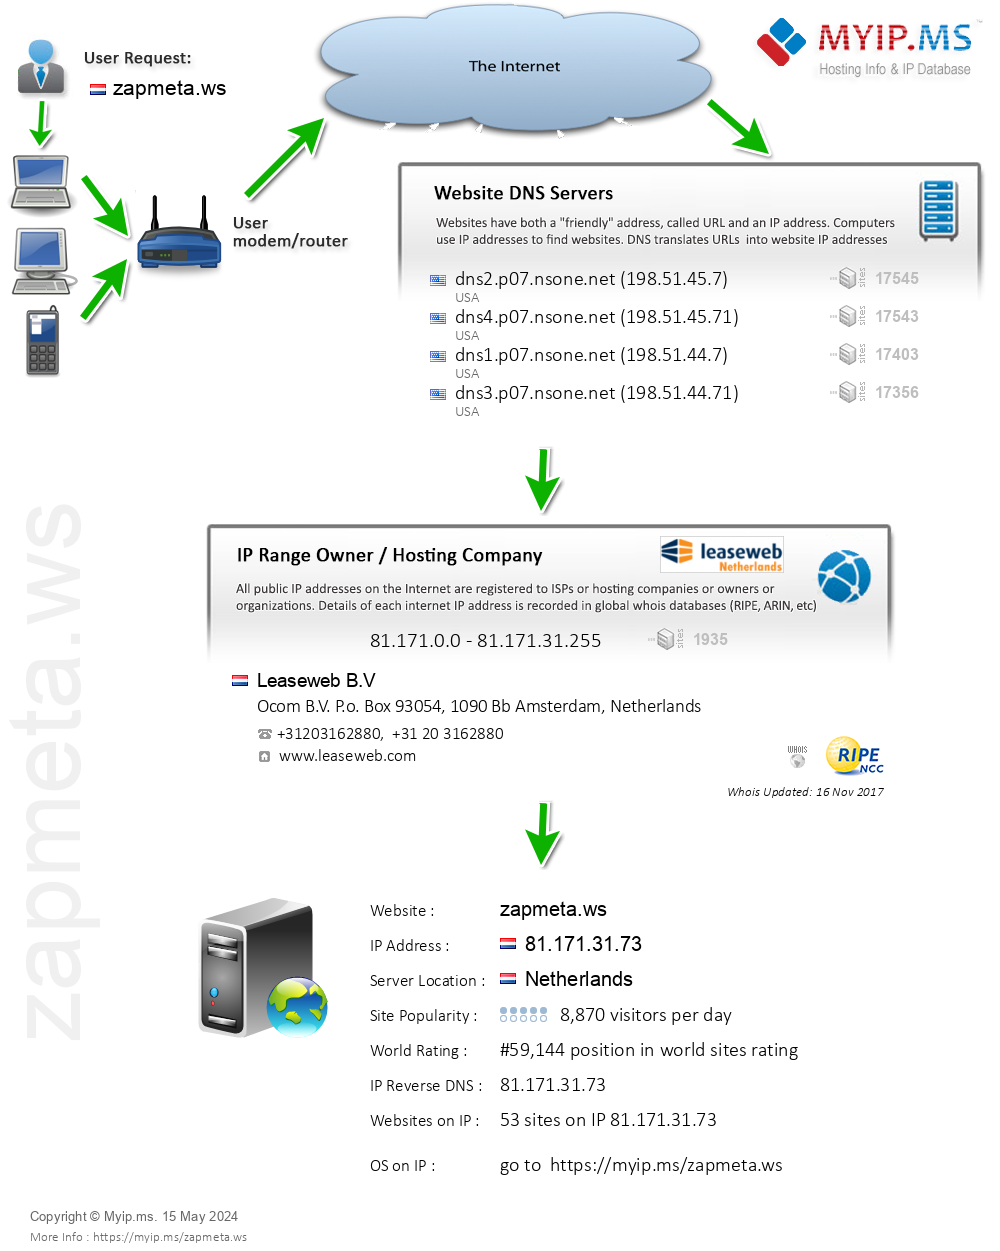 Zapmeta.ws - Website Hosting Visual IP Diagram